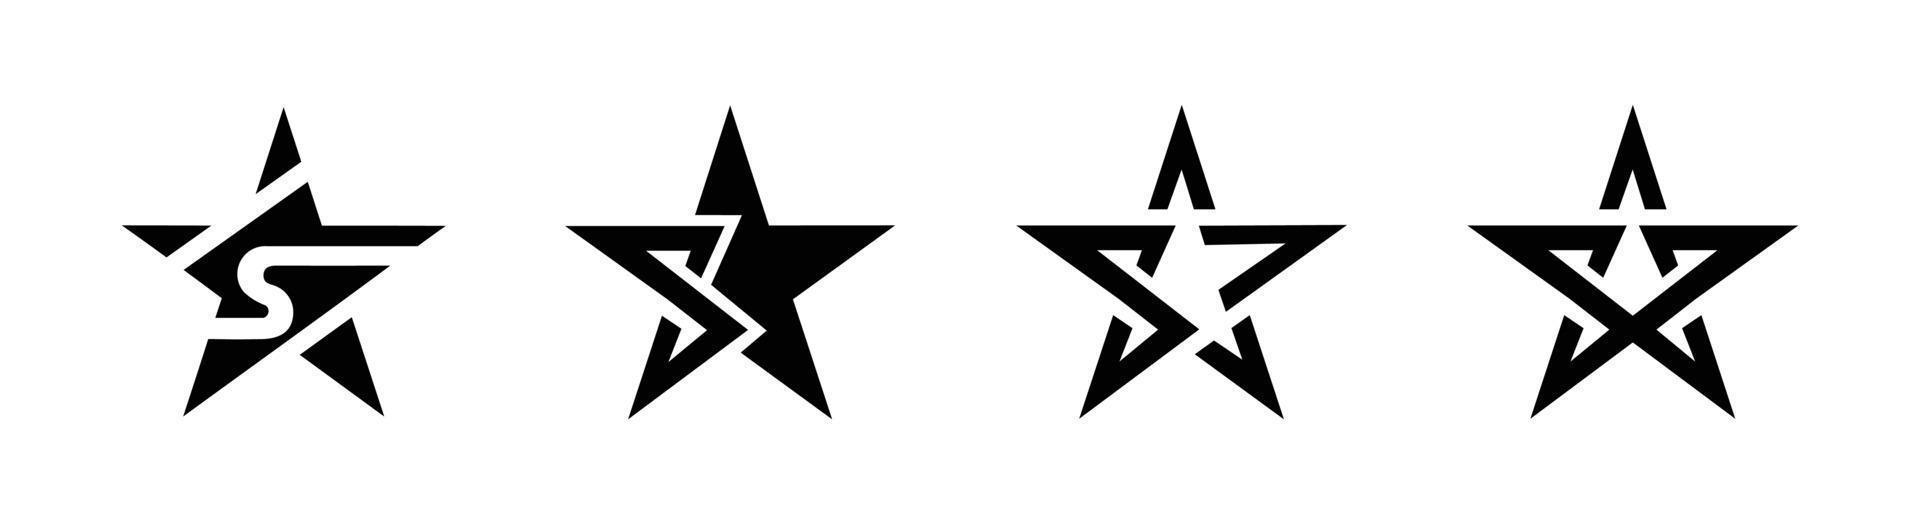 Stern-Logo-Vorlagenvektor, Stern-Vektor-Icons Satz von Symbolen isoliert. vektor